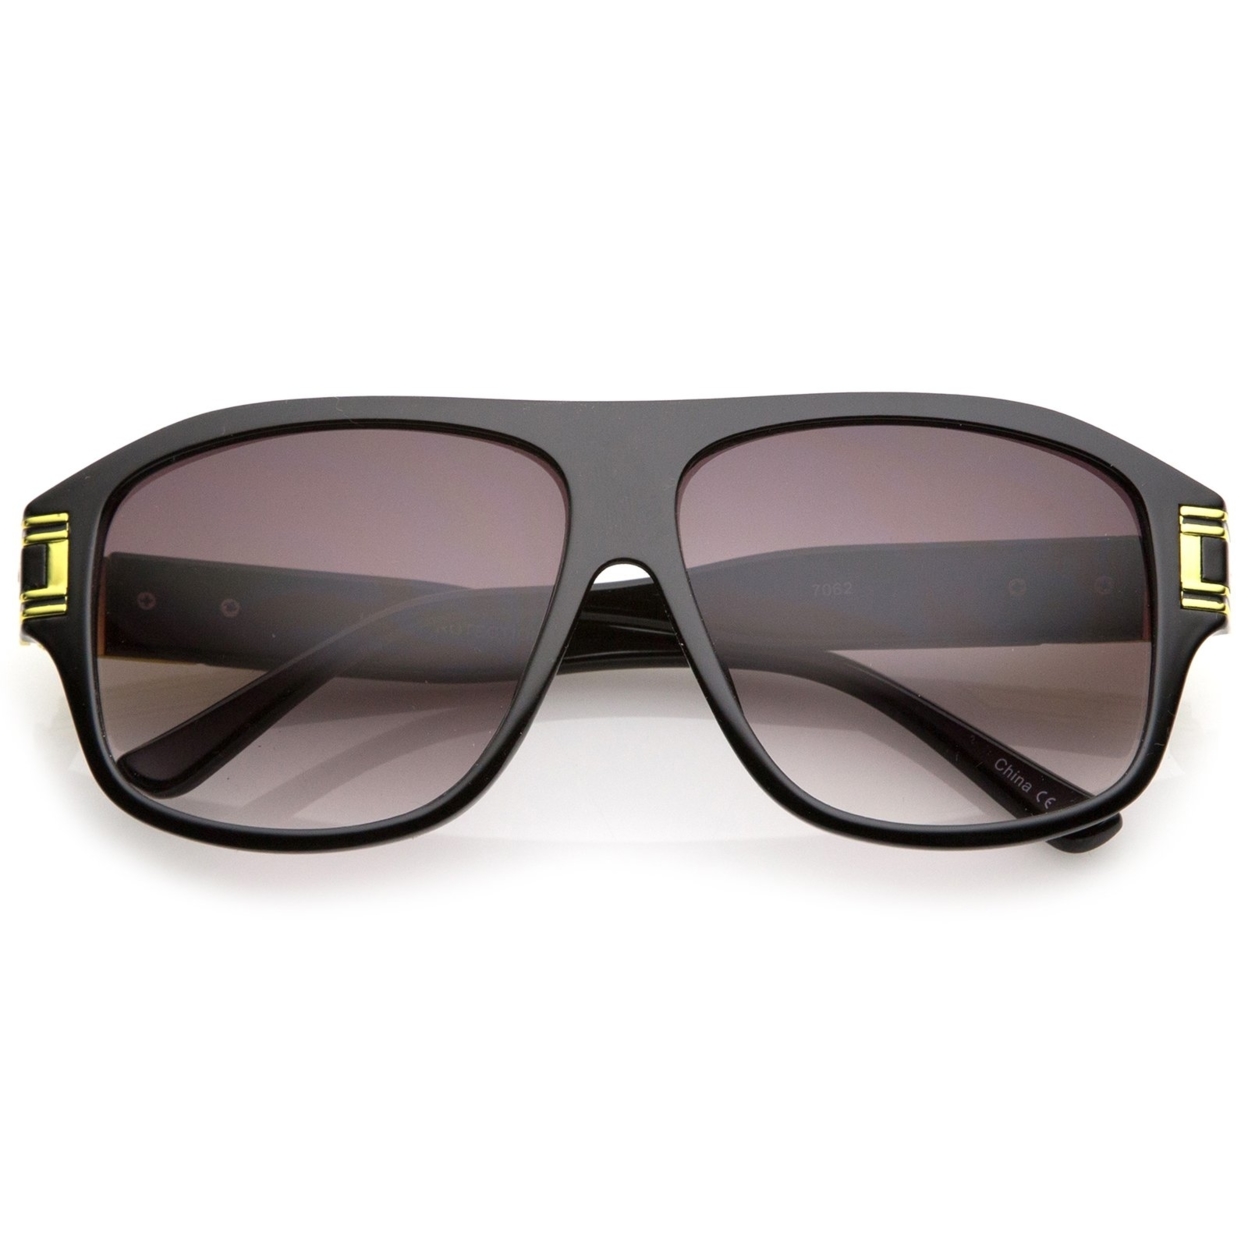 Oversize Flat Top Metal Accent Wide Temple Square Lens Aviator Sunglasses 60mm - Matte Black-Gold / Lavender